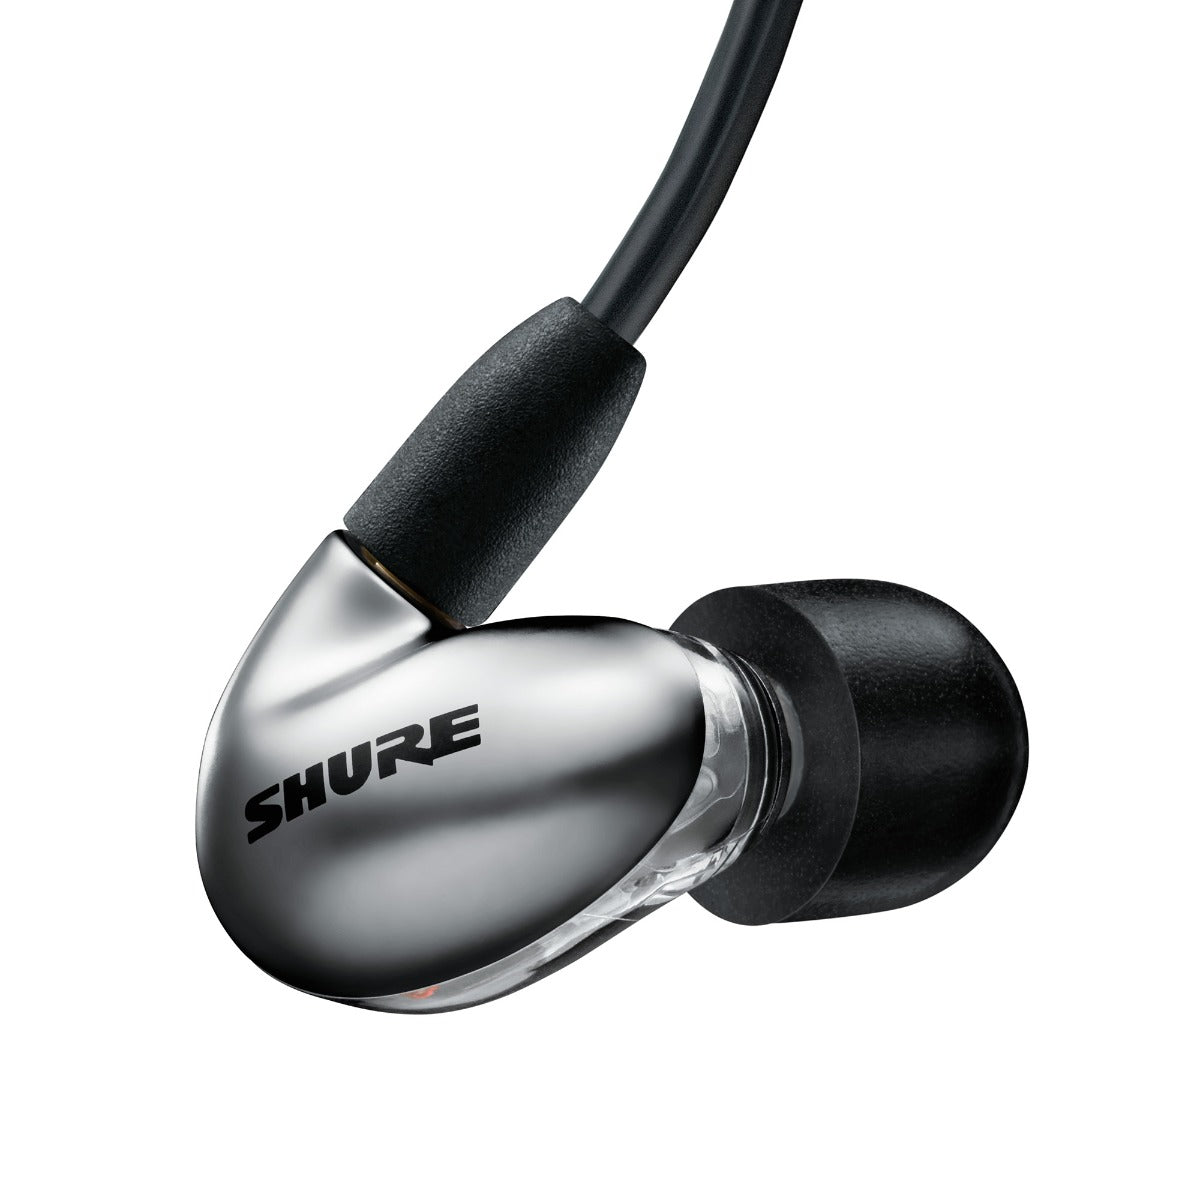 Shure SE846 Pro Gen 2 Sound Isolating Earphones - Graphite, View 4